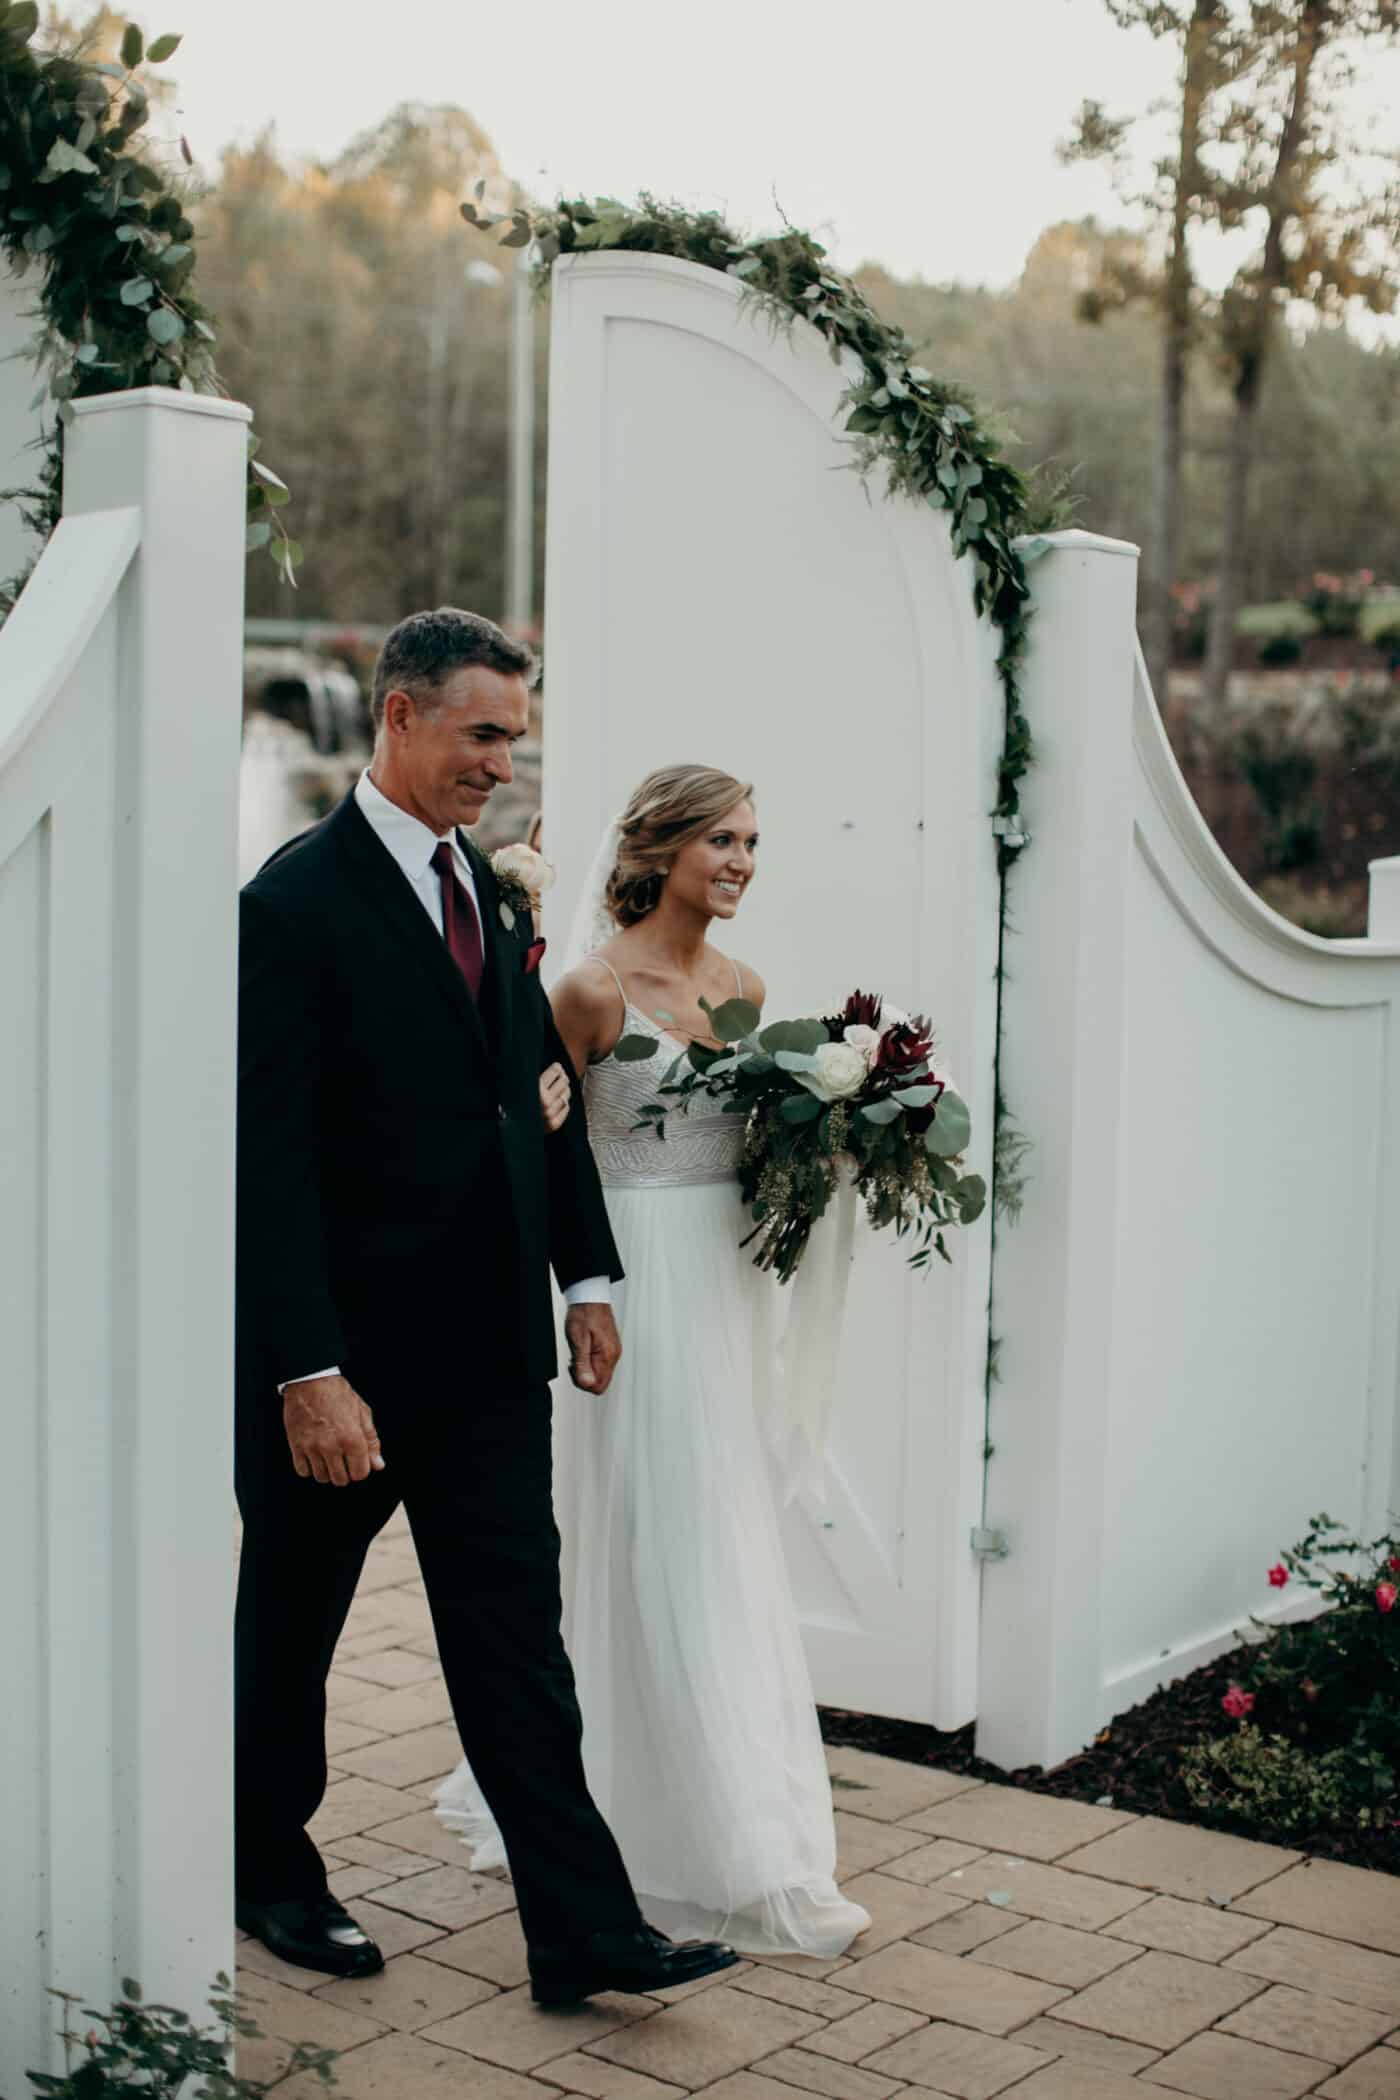 Selecting Your Virginia Wedding Venue | Entwined Events | Venue: Bella Rose Plantation in Lynchburg, VA | Photo Credit: Joe + Kathrina Photography